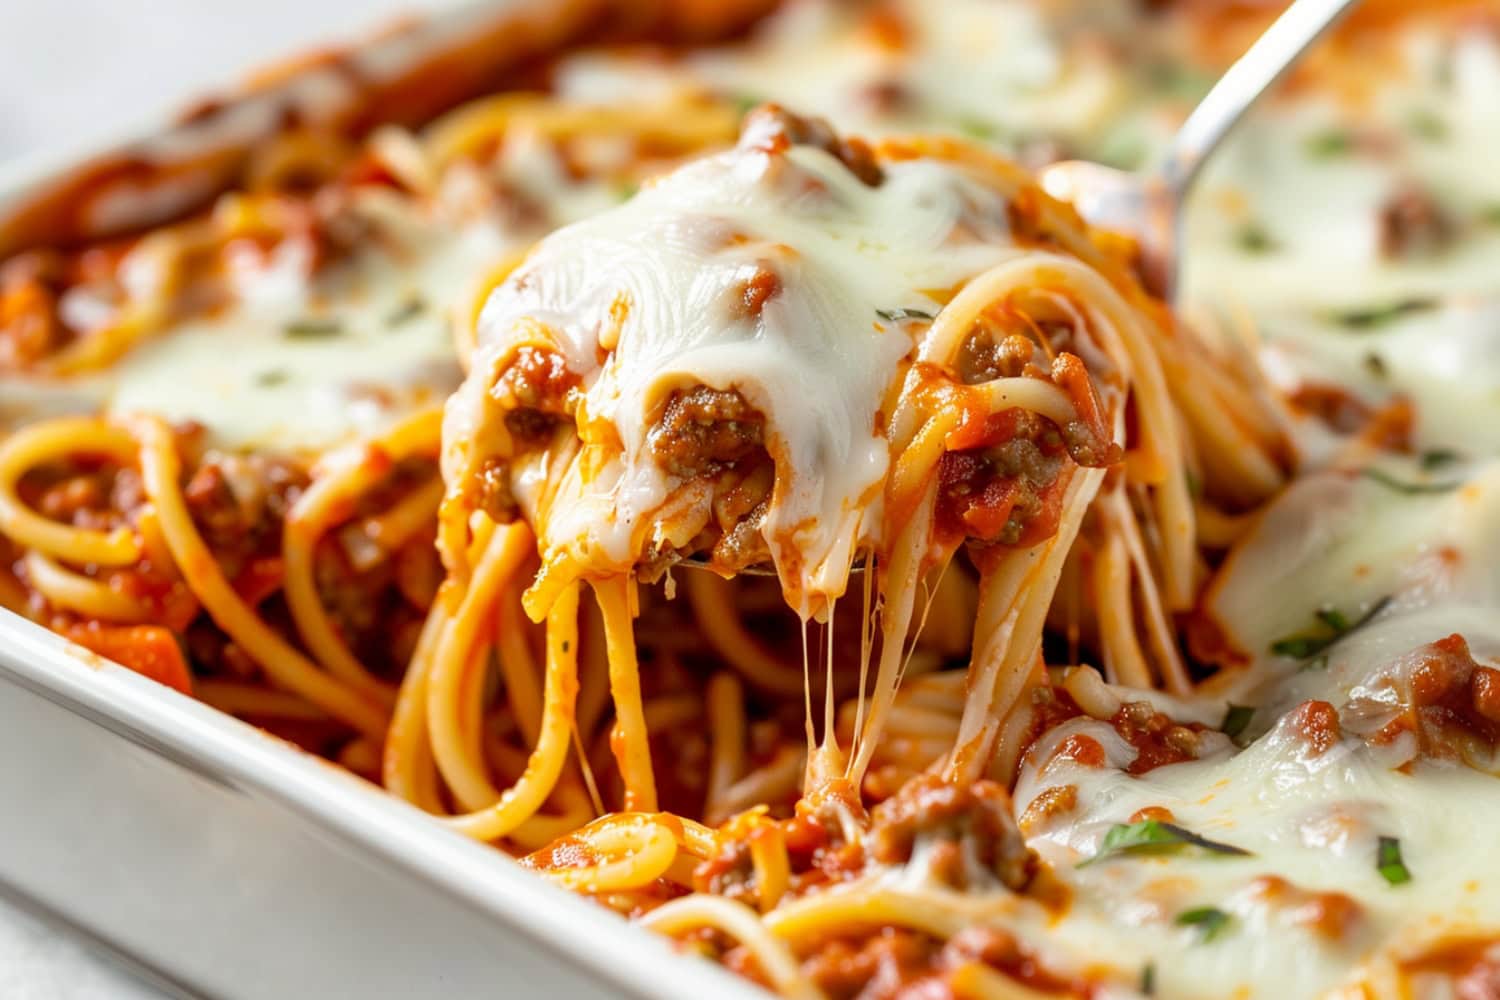 Homemade TikTok spaghetti, showcasing a perfect blend of creamy sauce and tender pasta.